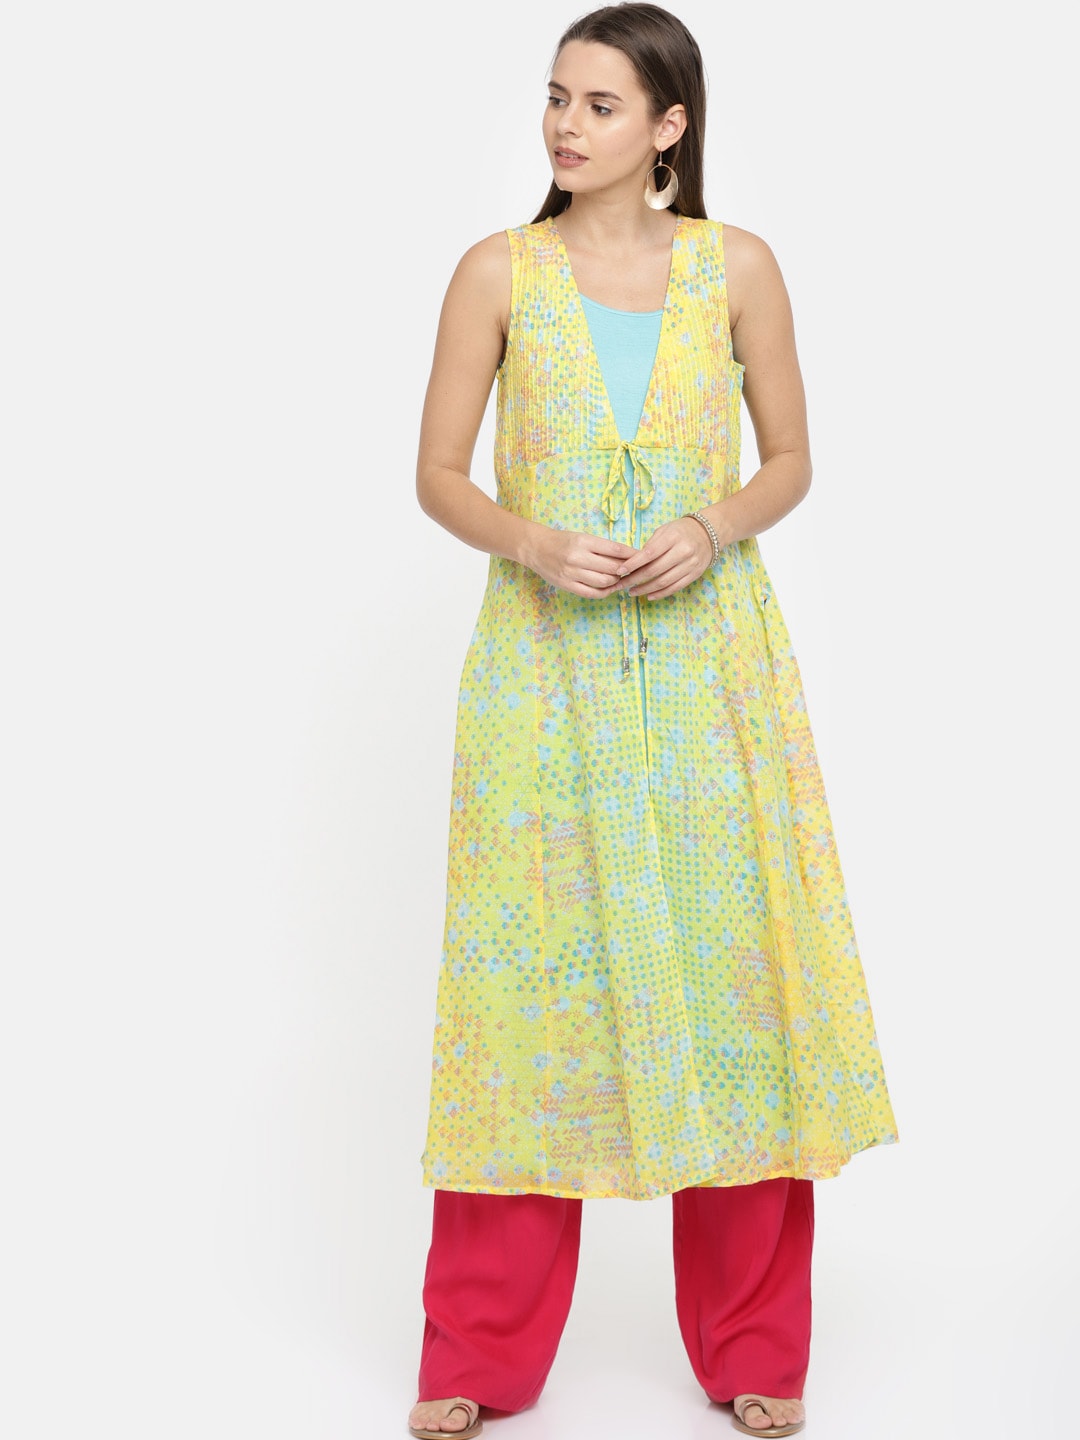 AURELIA Yellow Printed GILET Tie-Up Shrug with Camisole Price in India